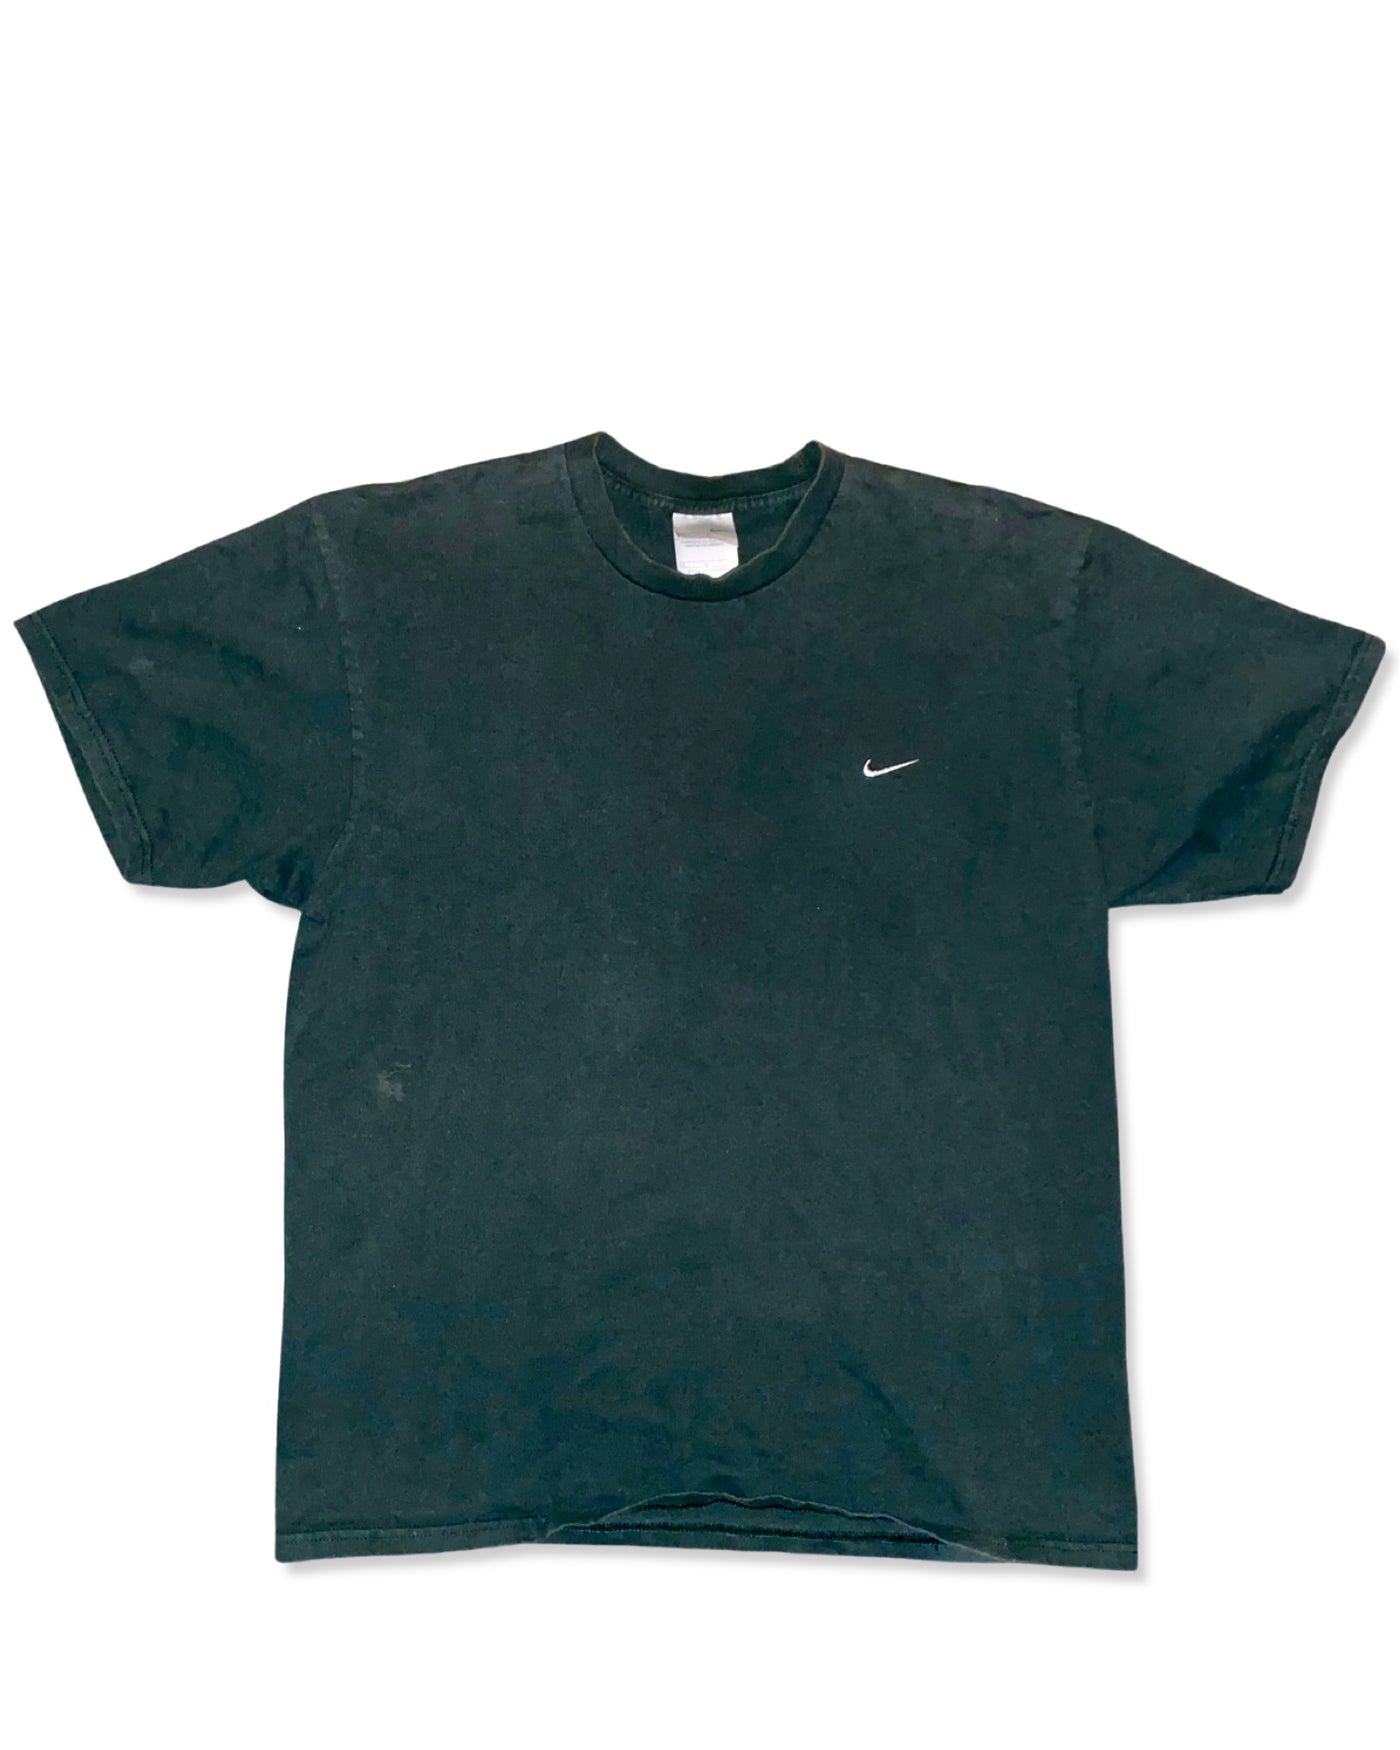 Vintage Forest Green Nike Essentials T-Shirt